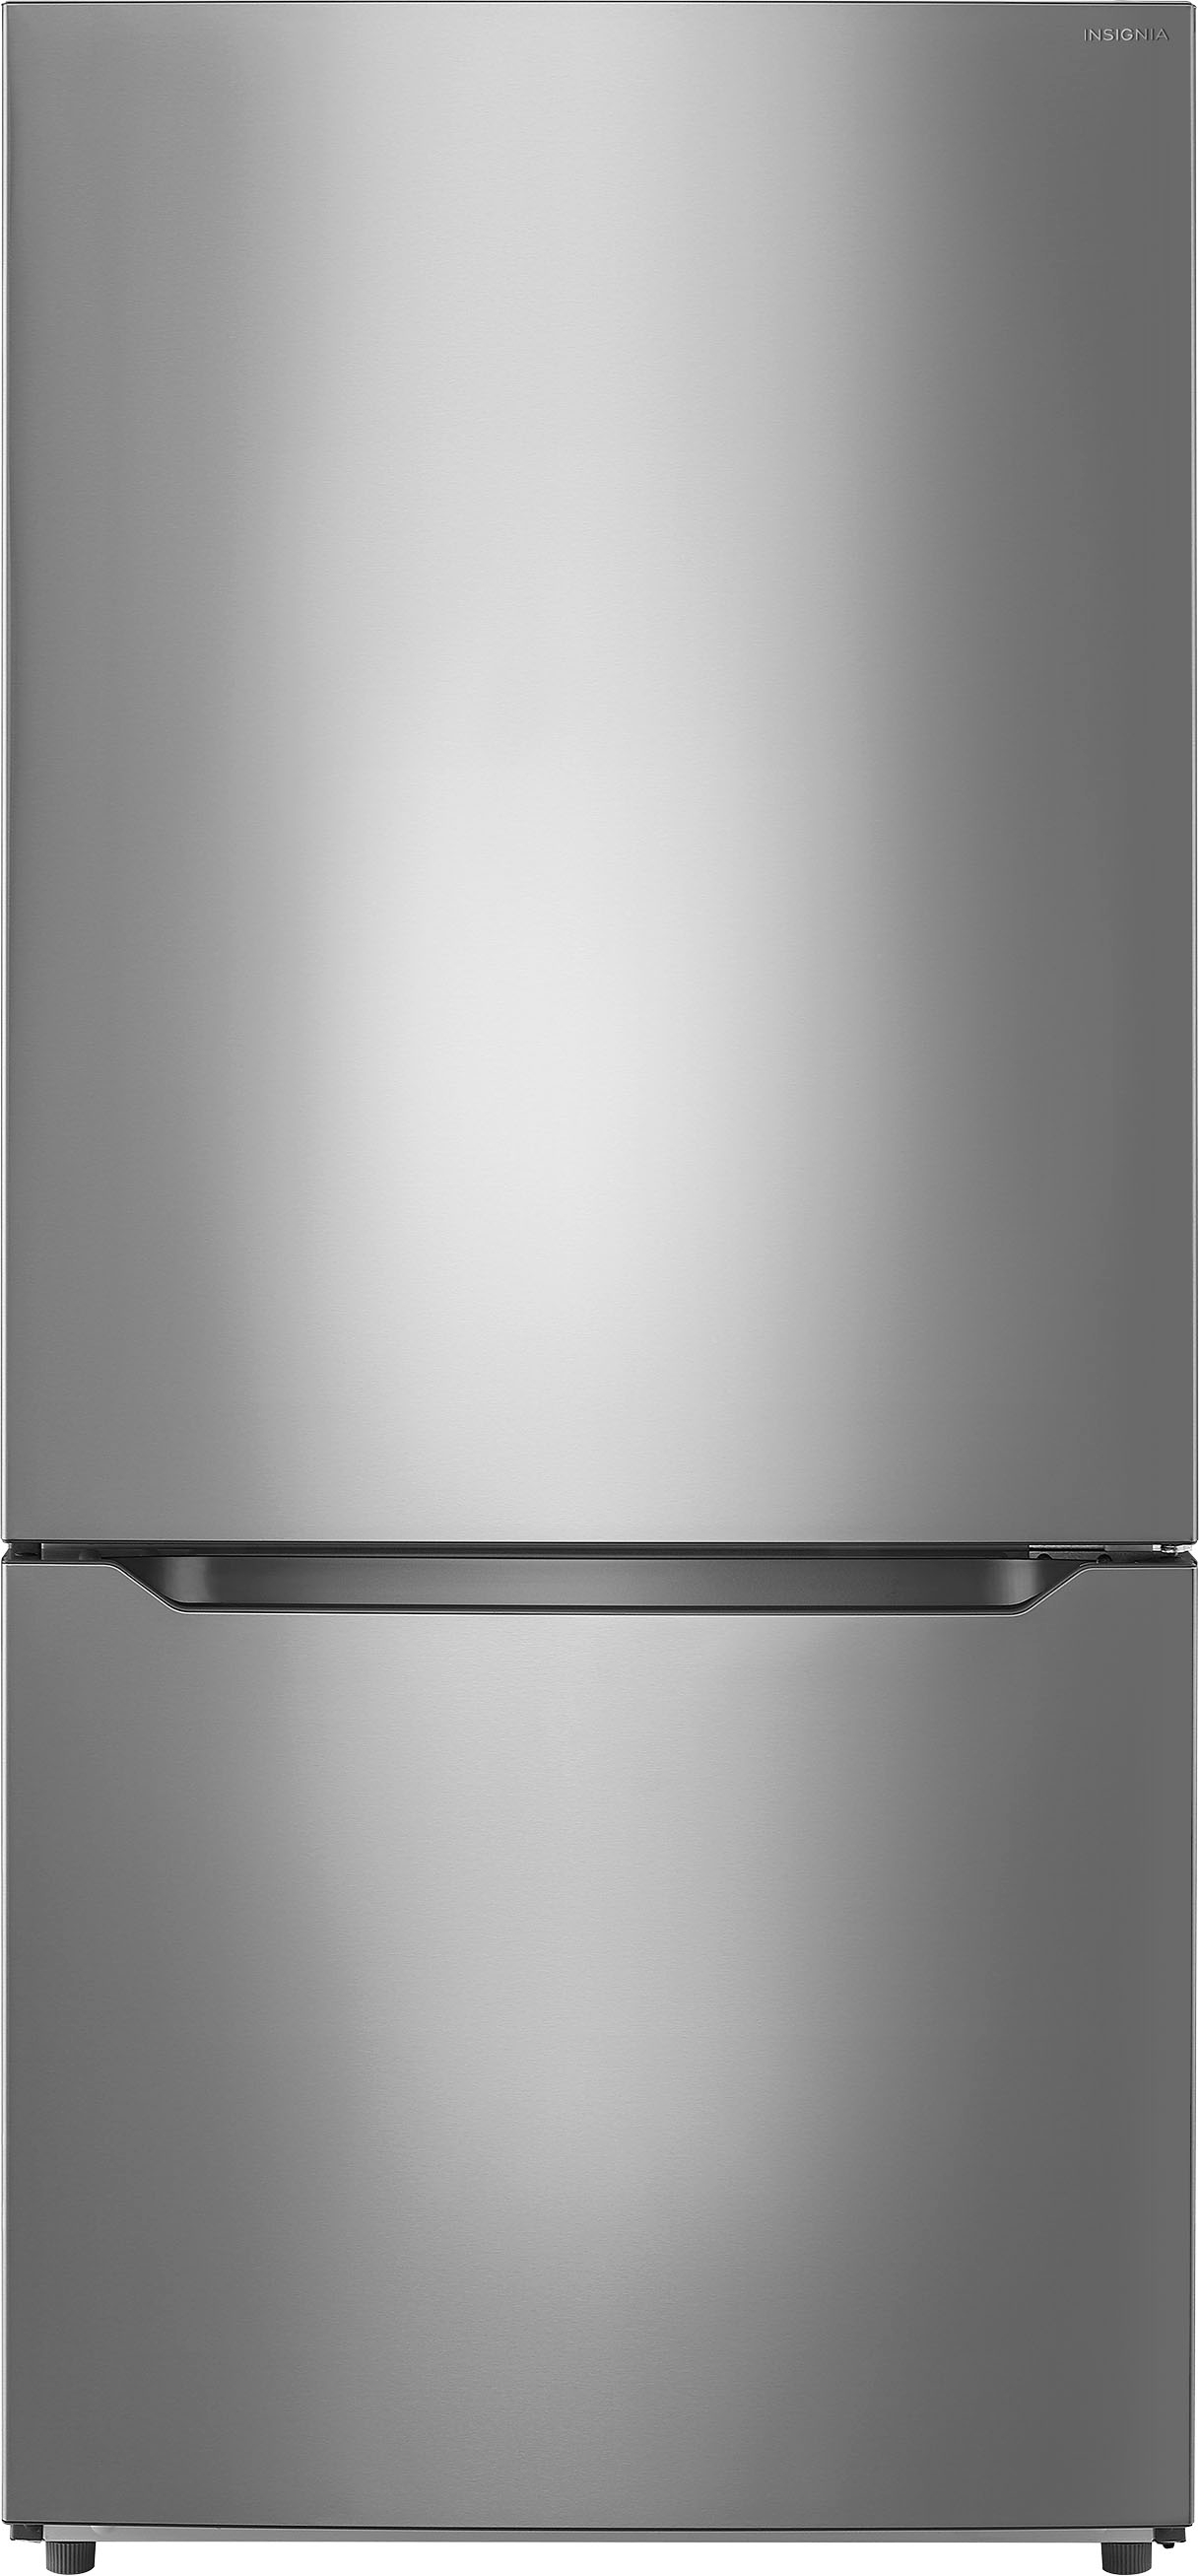 Whirlpool White 30'' Bottom Freezer Fridge - Appliance Max